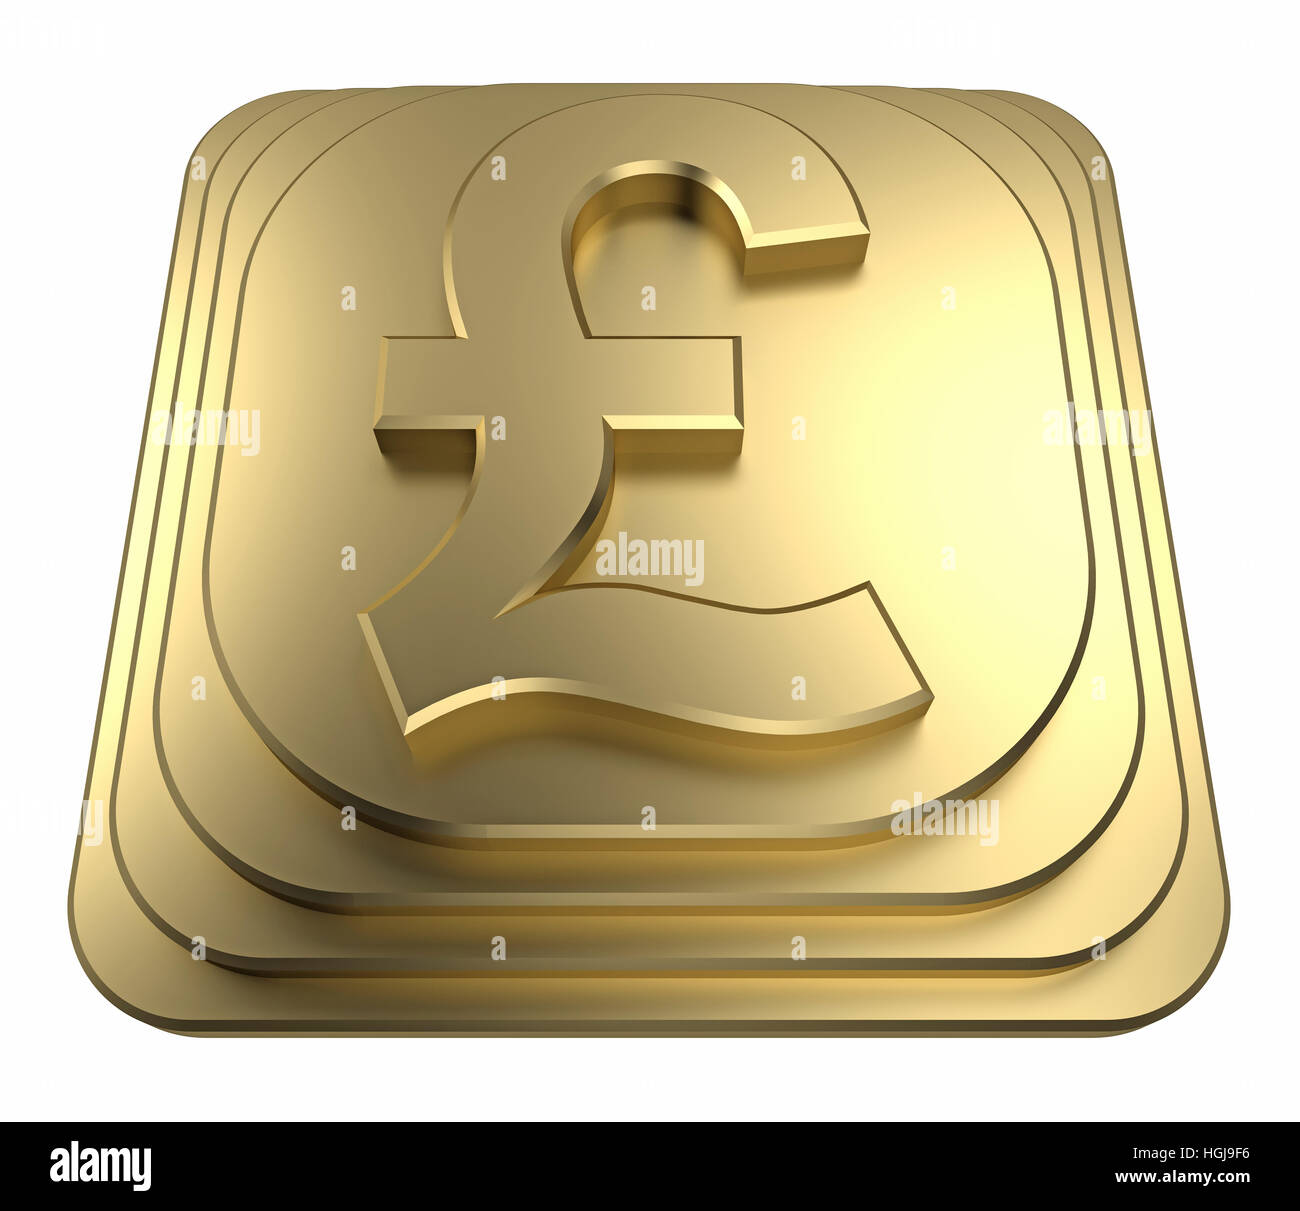 gold pound symbol on a pedestal. 3d rendering Stock Photo